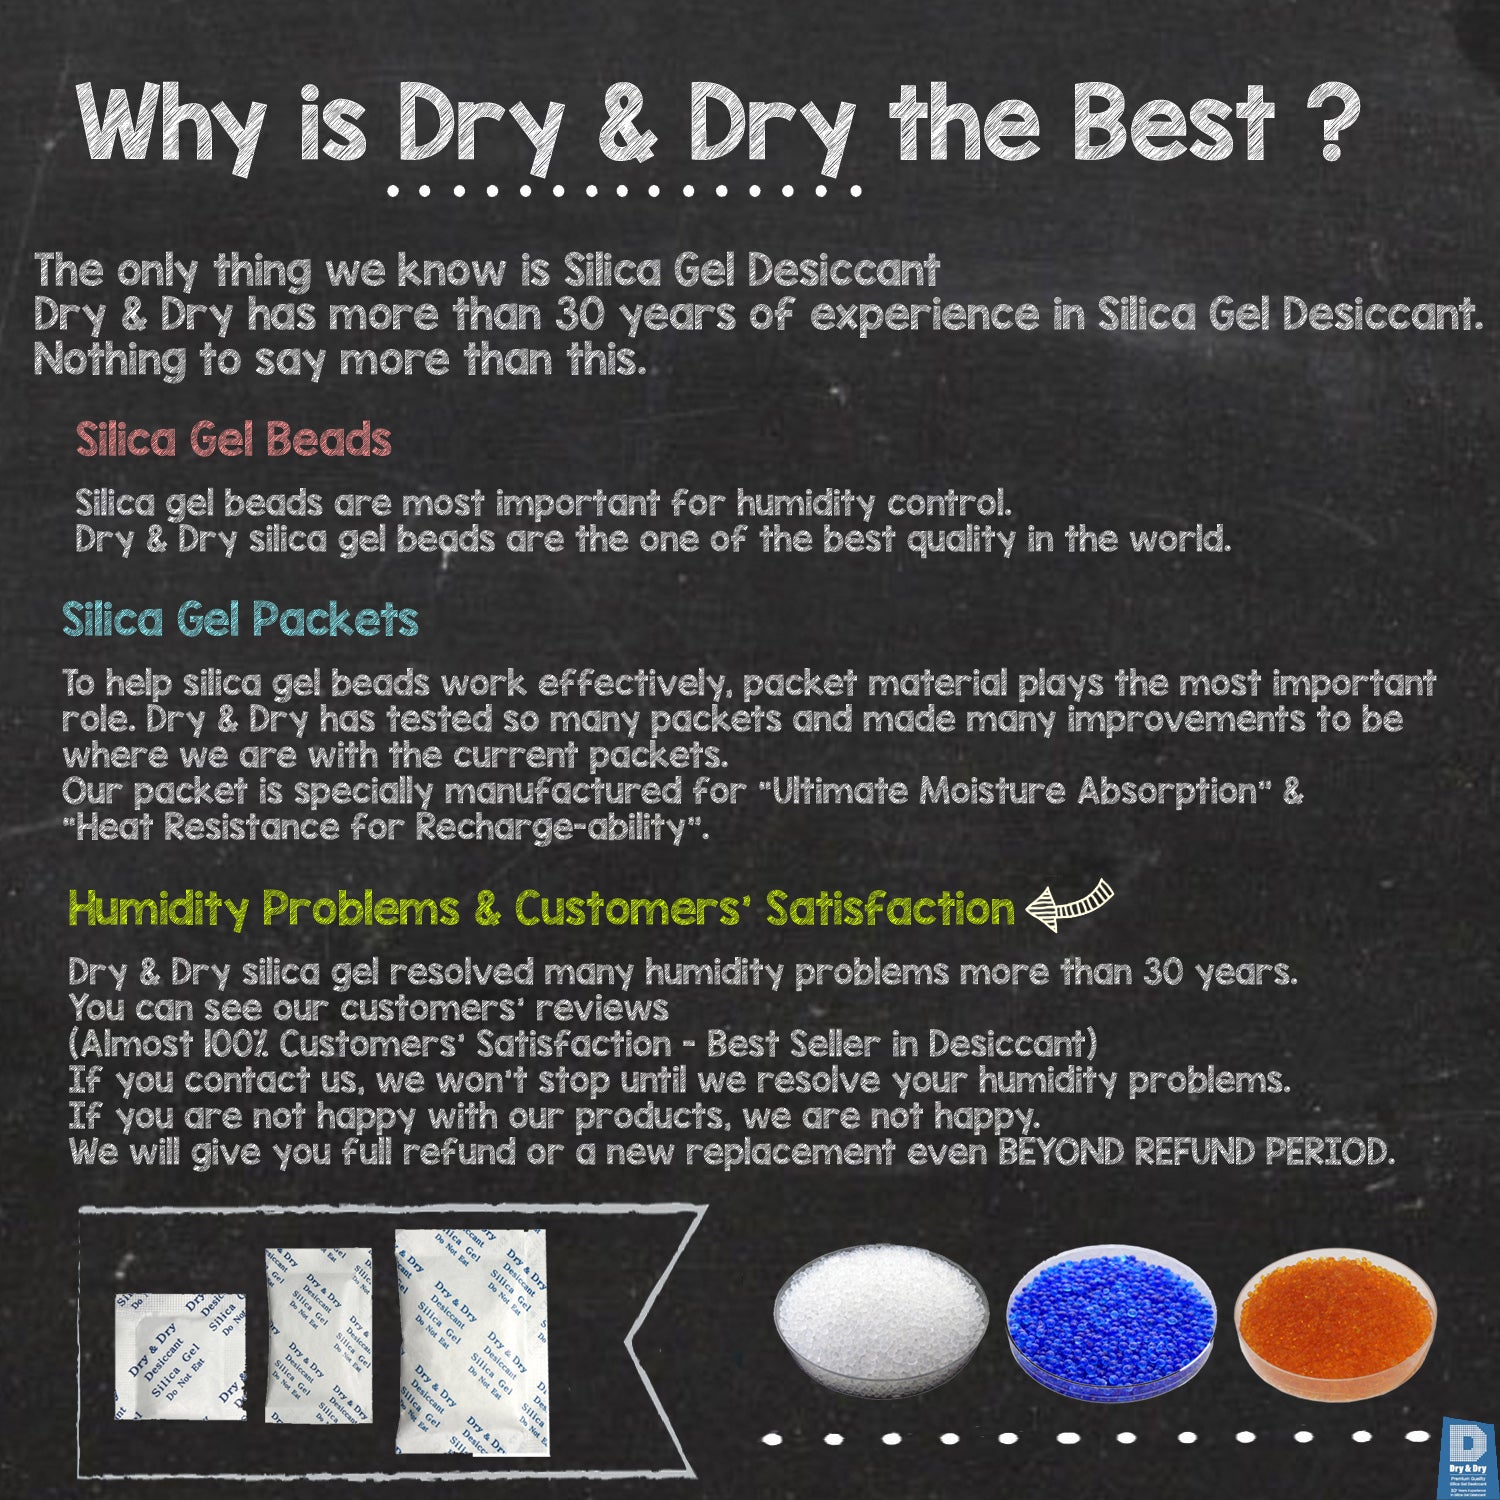 Dry & Dry Premium Orange Indicating Silica Gel for Flower Drying Desic